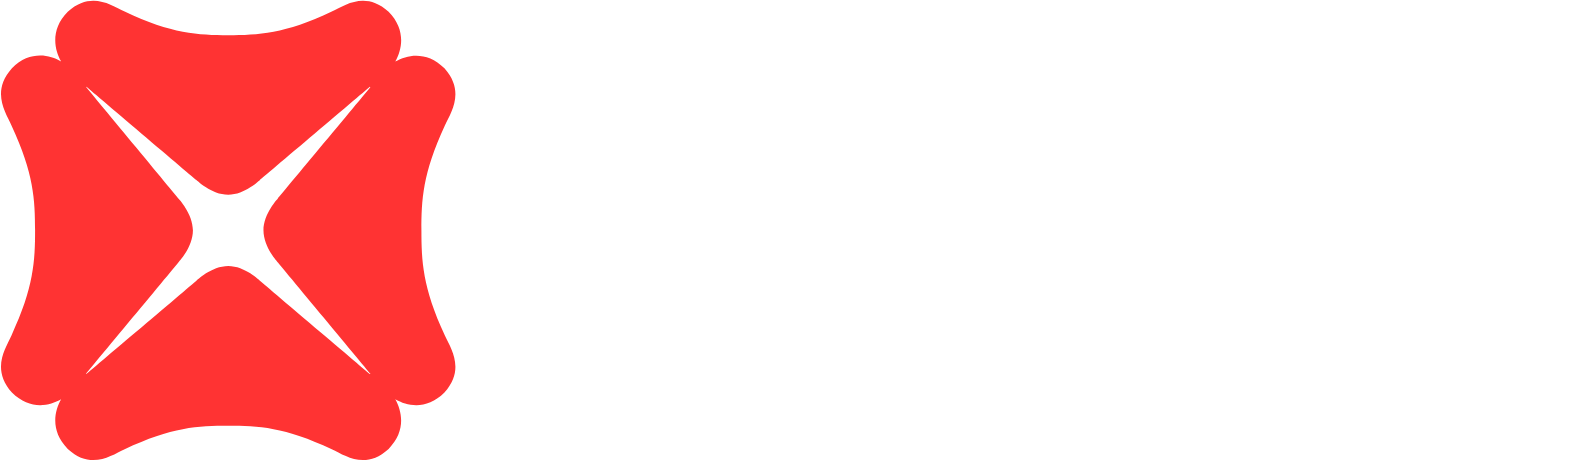 DBS Group logo large for dark backgrounds (transparent PNG)